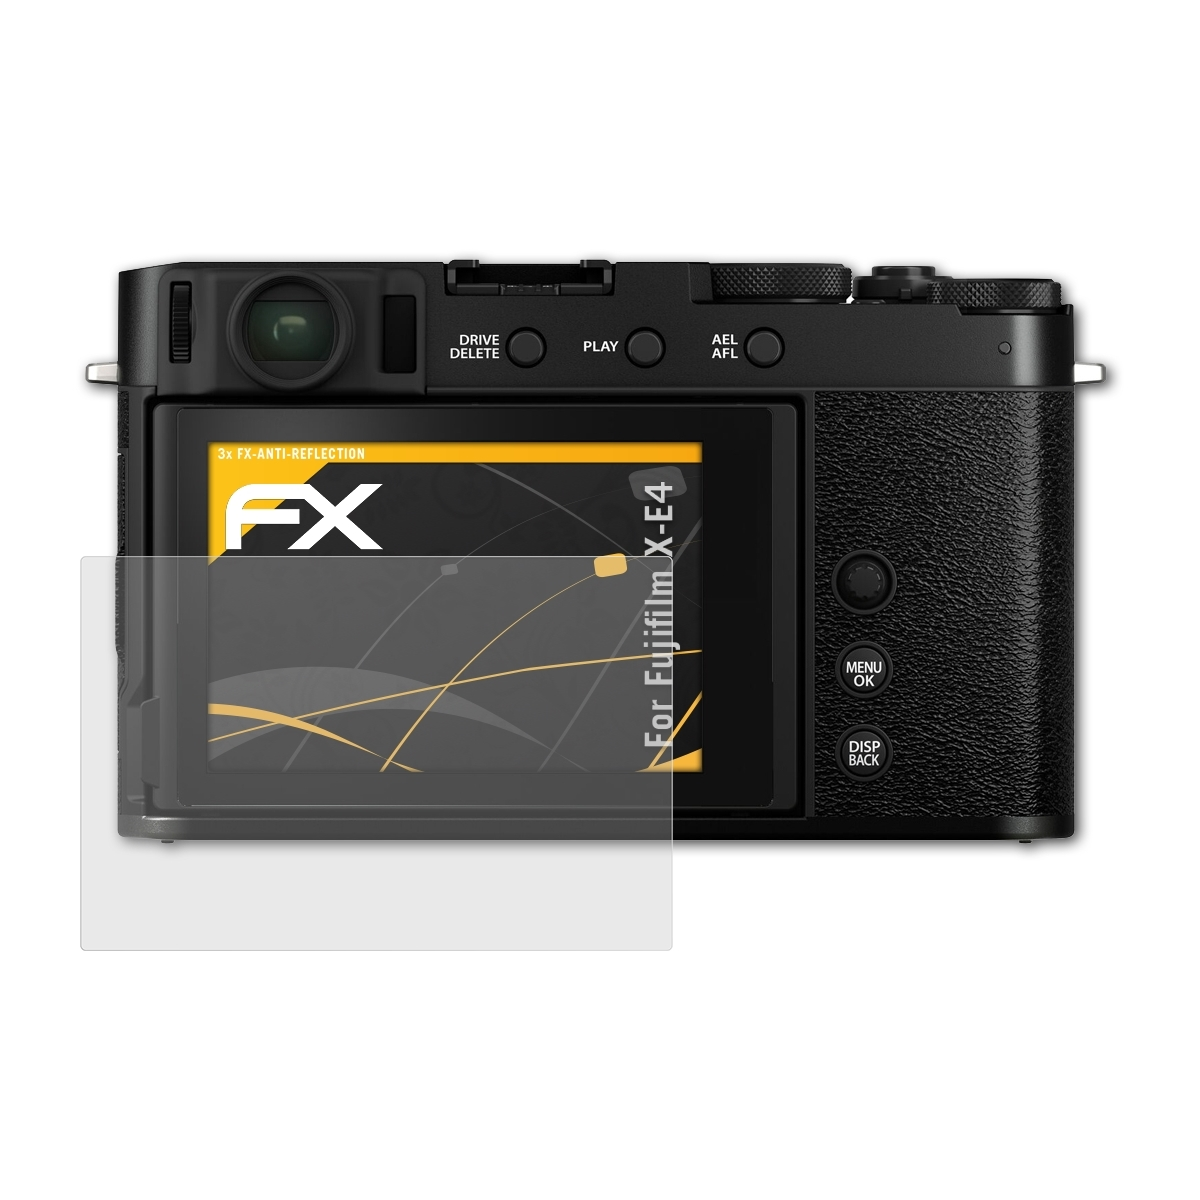 3x FX-Antireflex Displayschutz(für X-E4) Fujifilm ATFOLIX